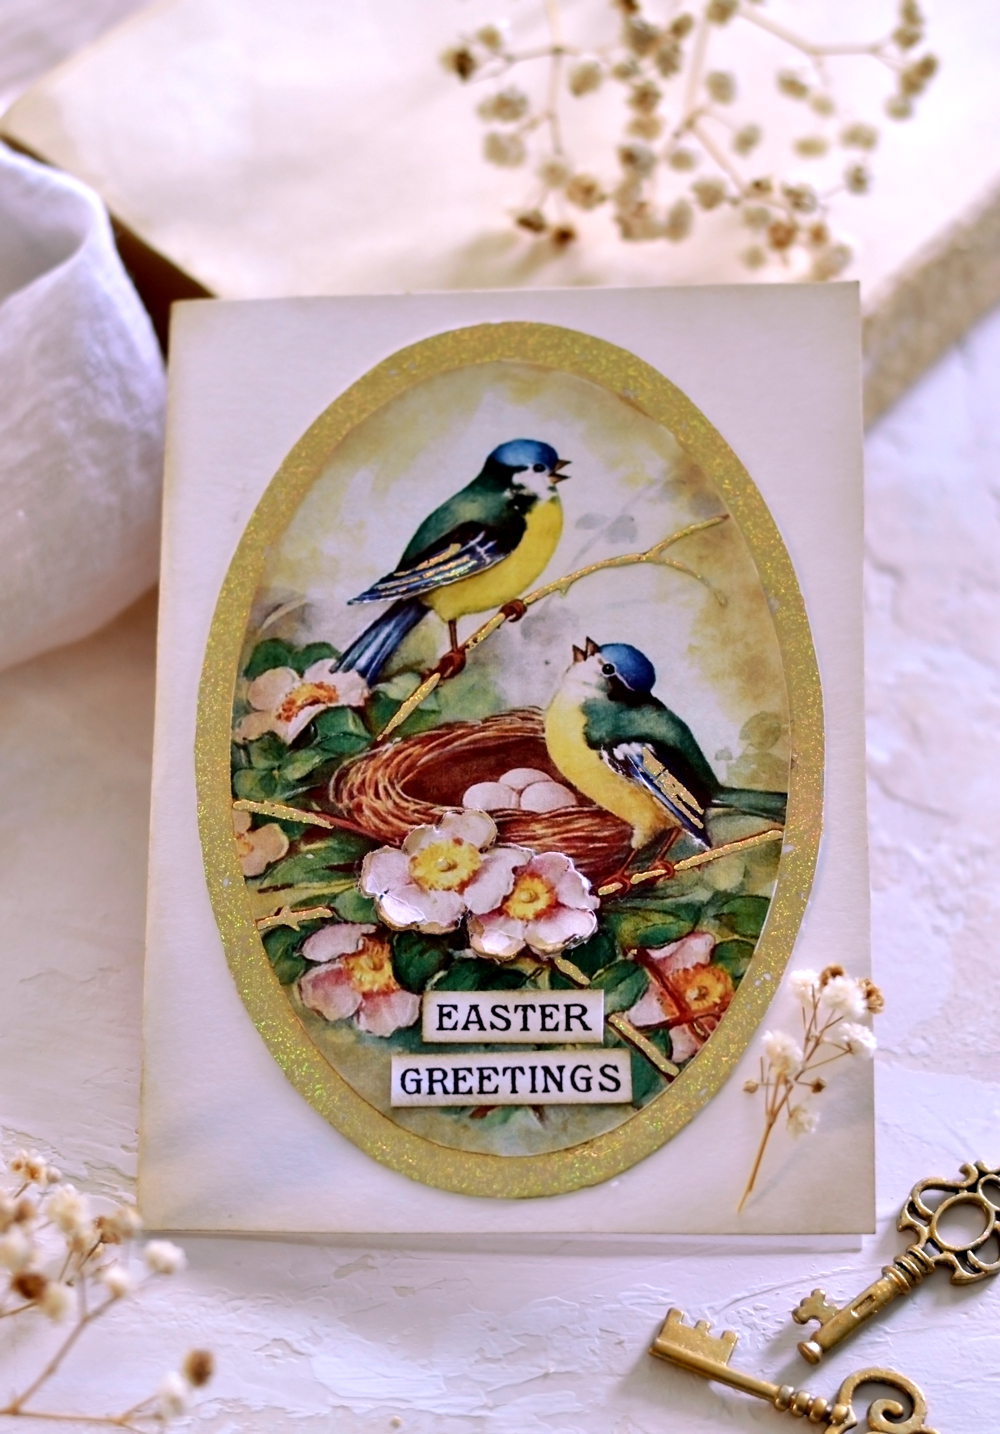 DIY Easter Card - the final result